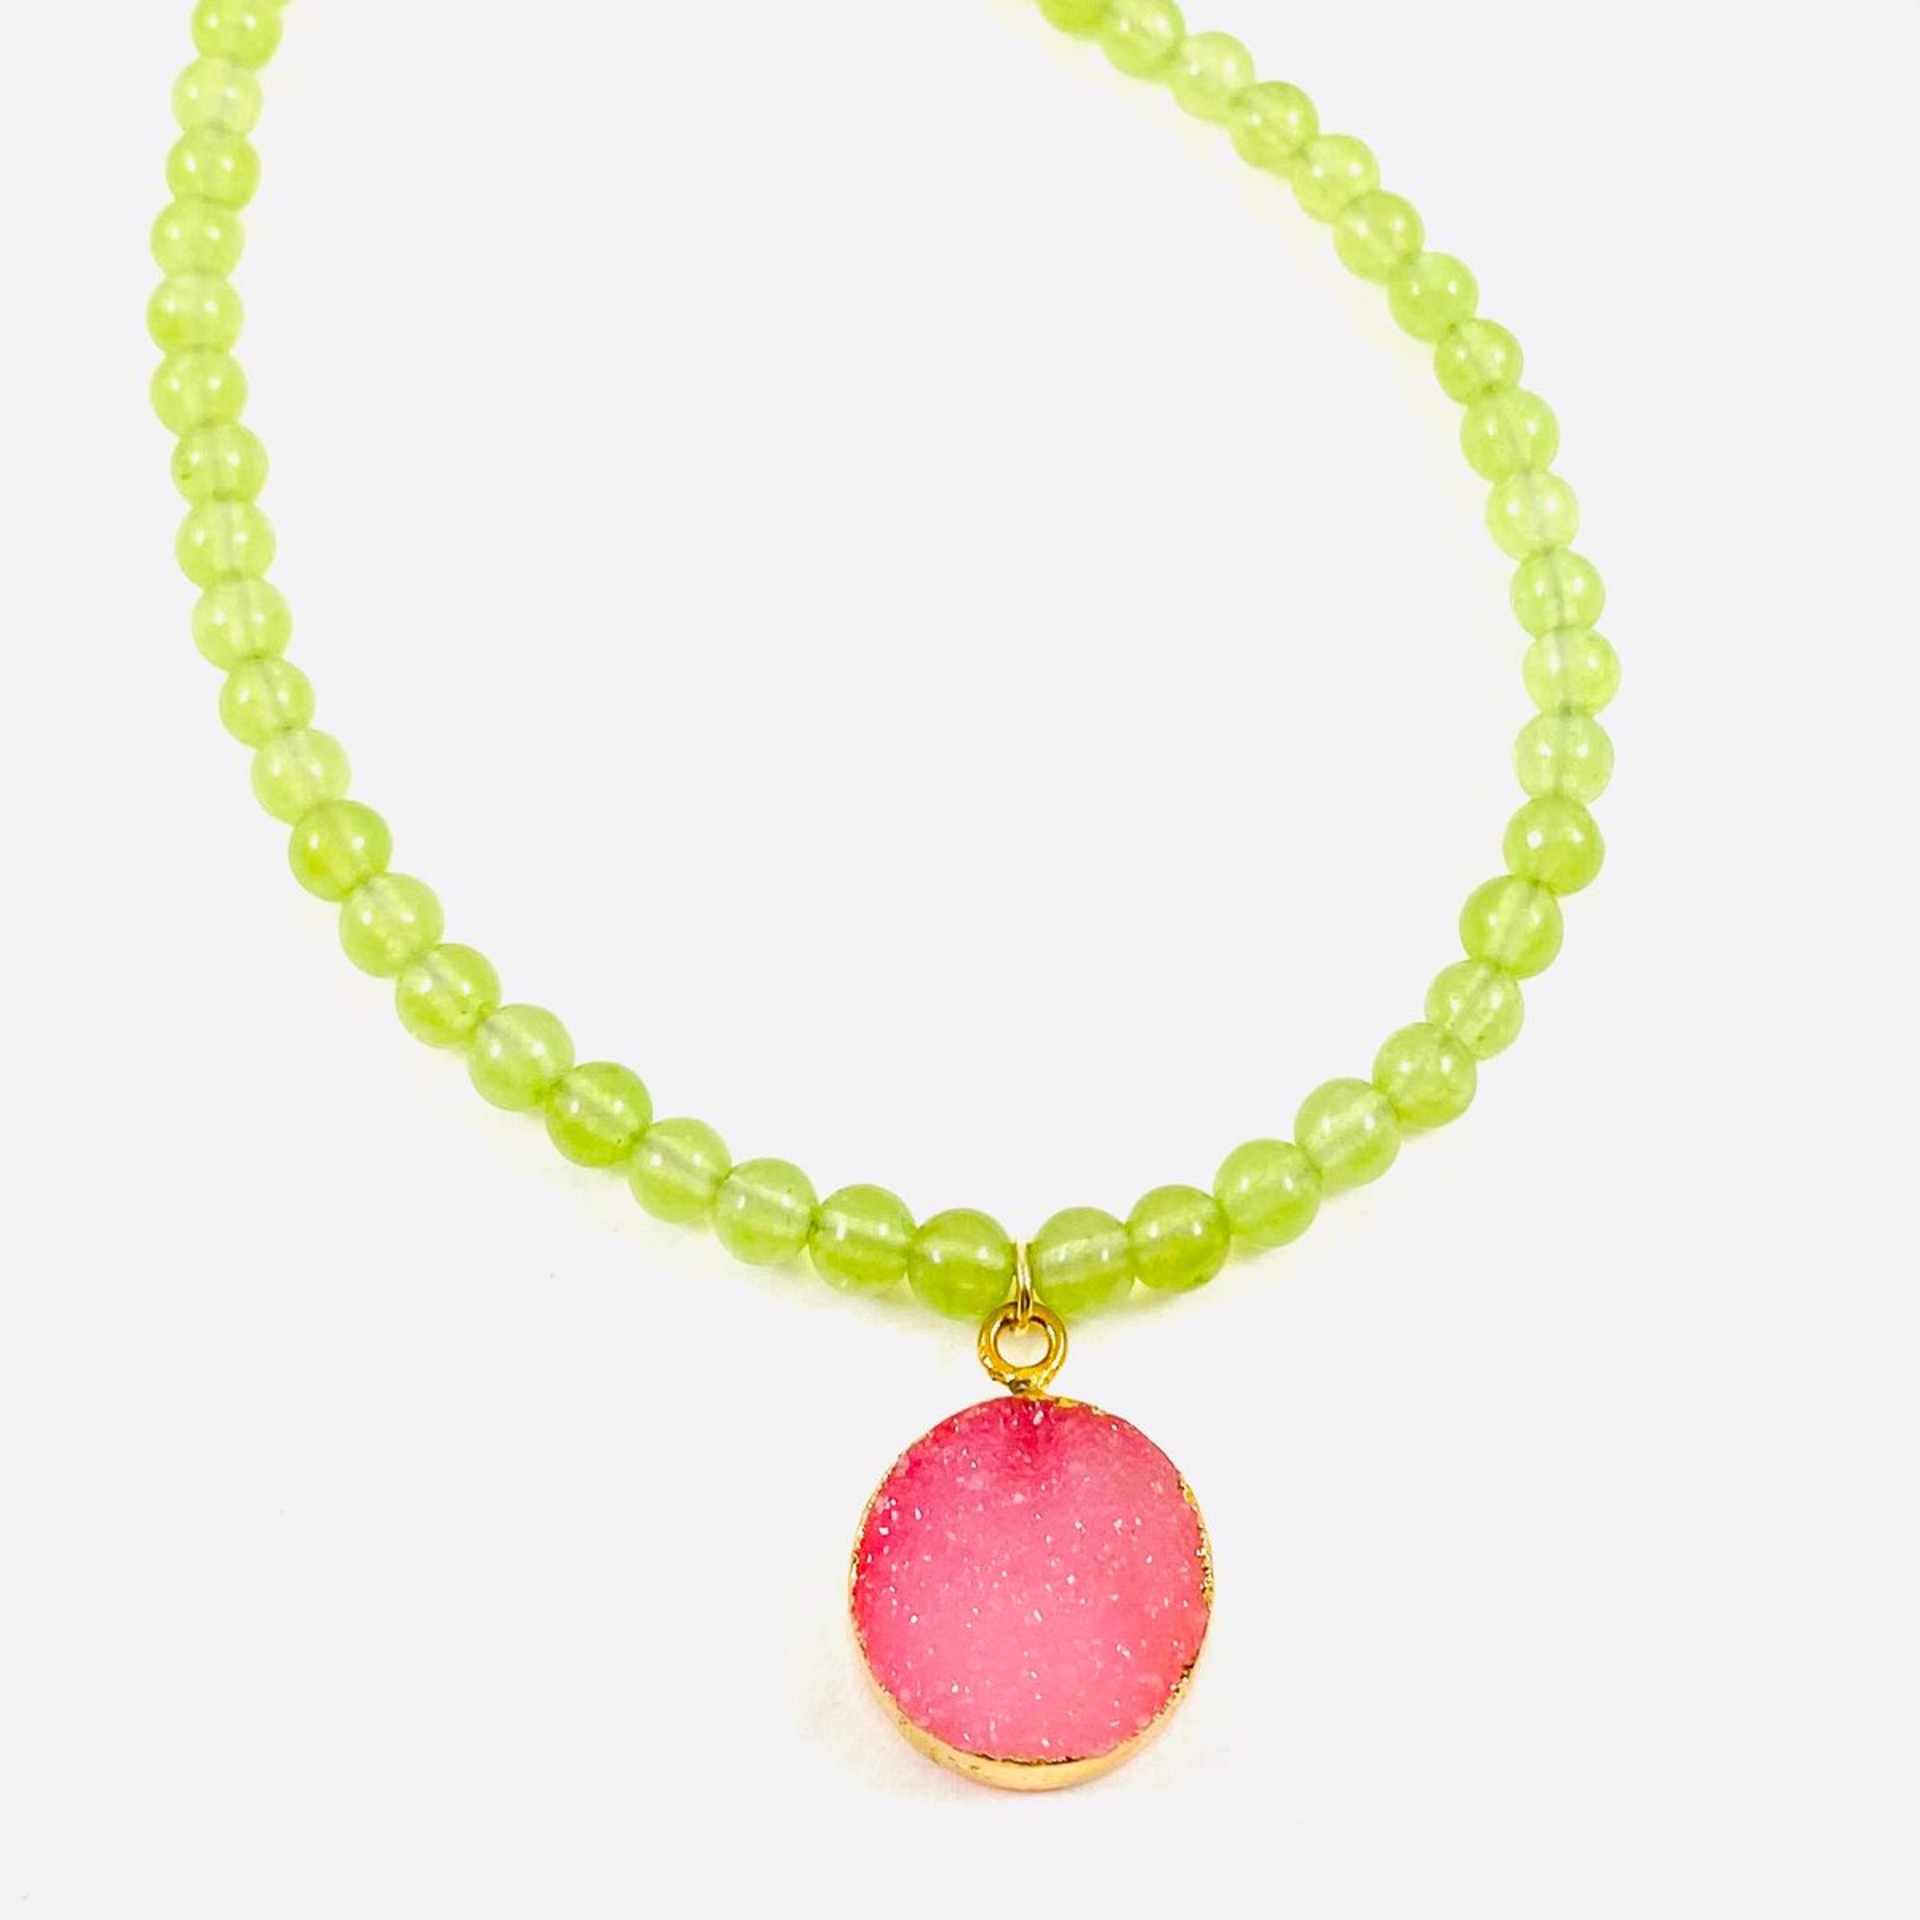 Olive Jade Round Pink Druzy Pendant Necklace NT21-145 by Nance Trueworthy